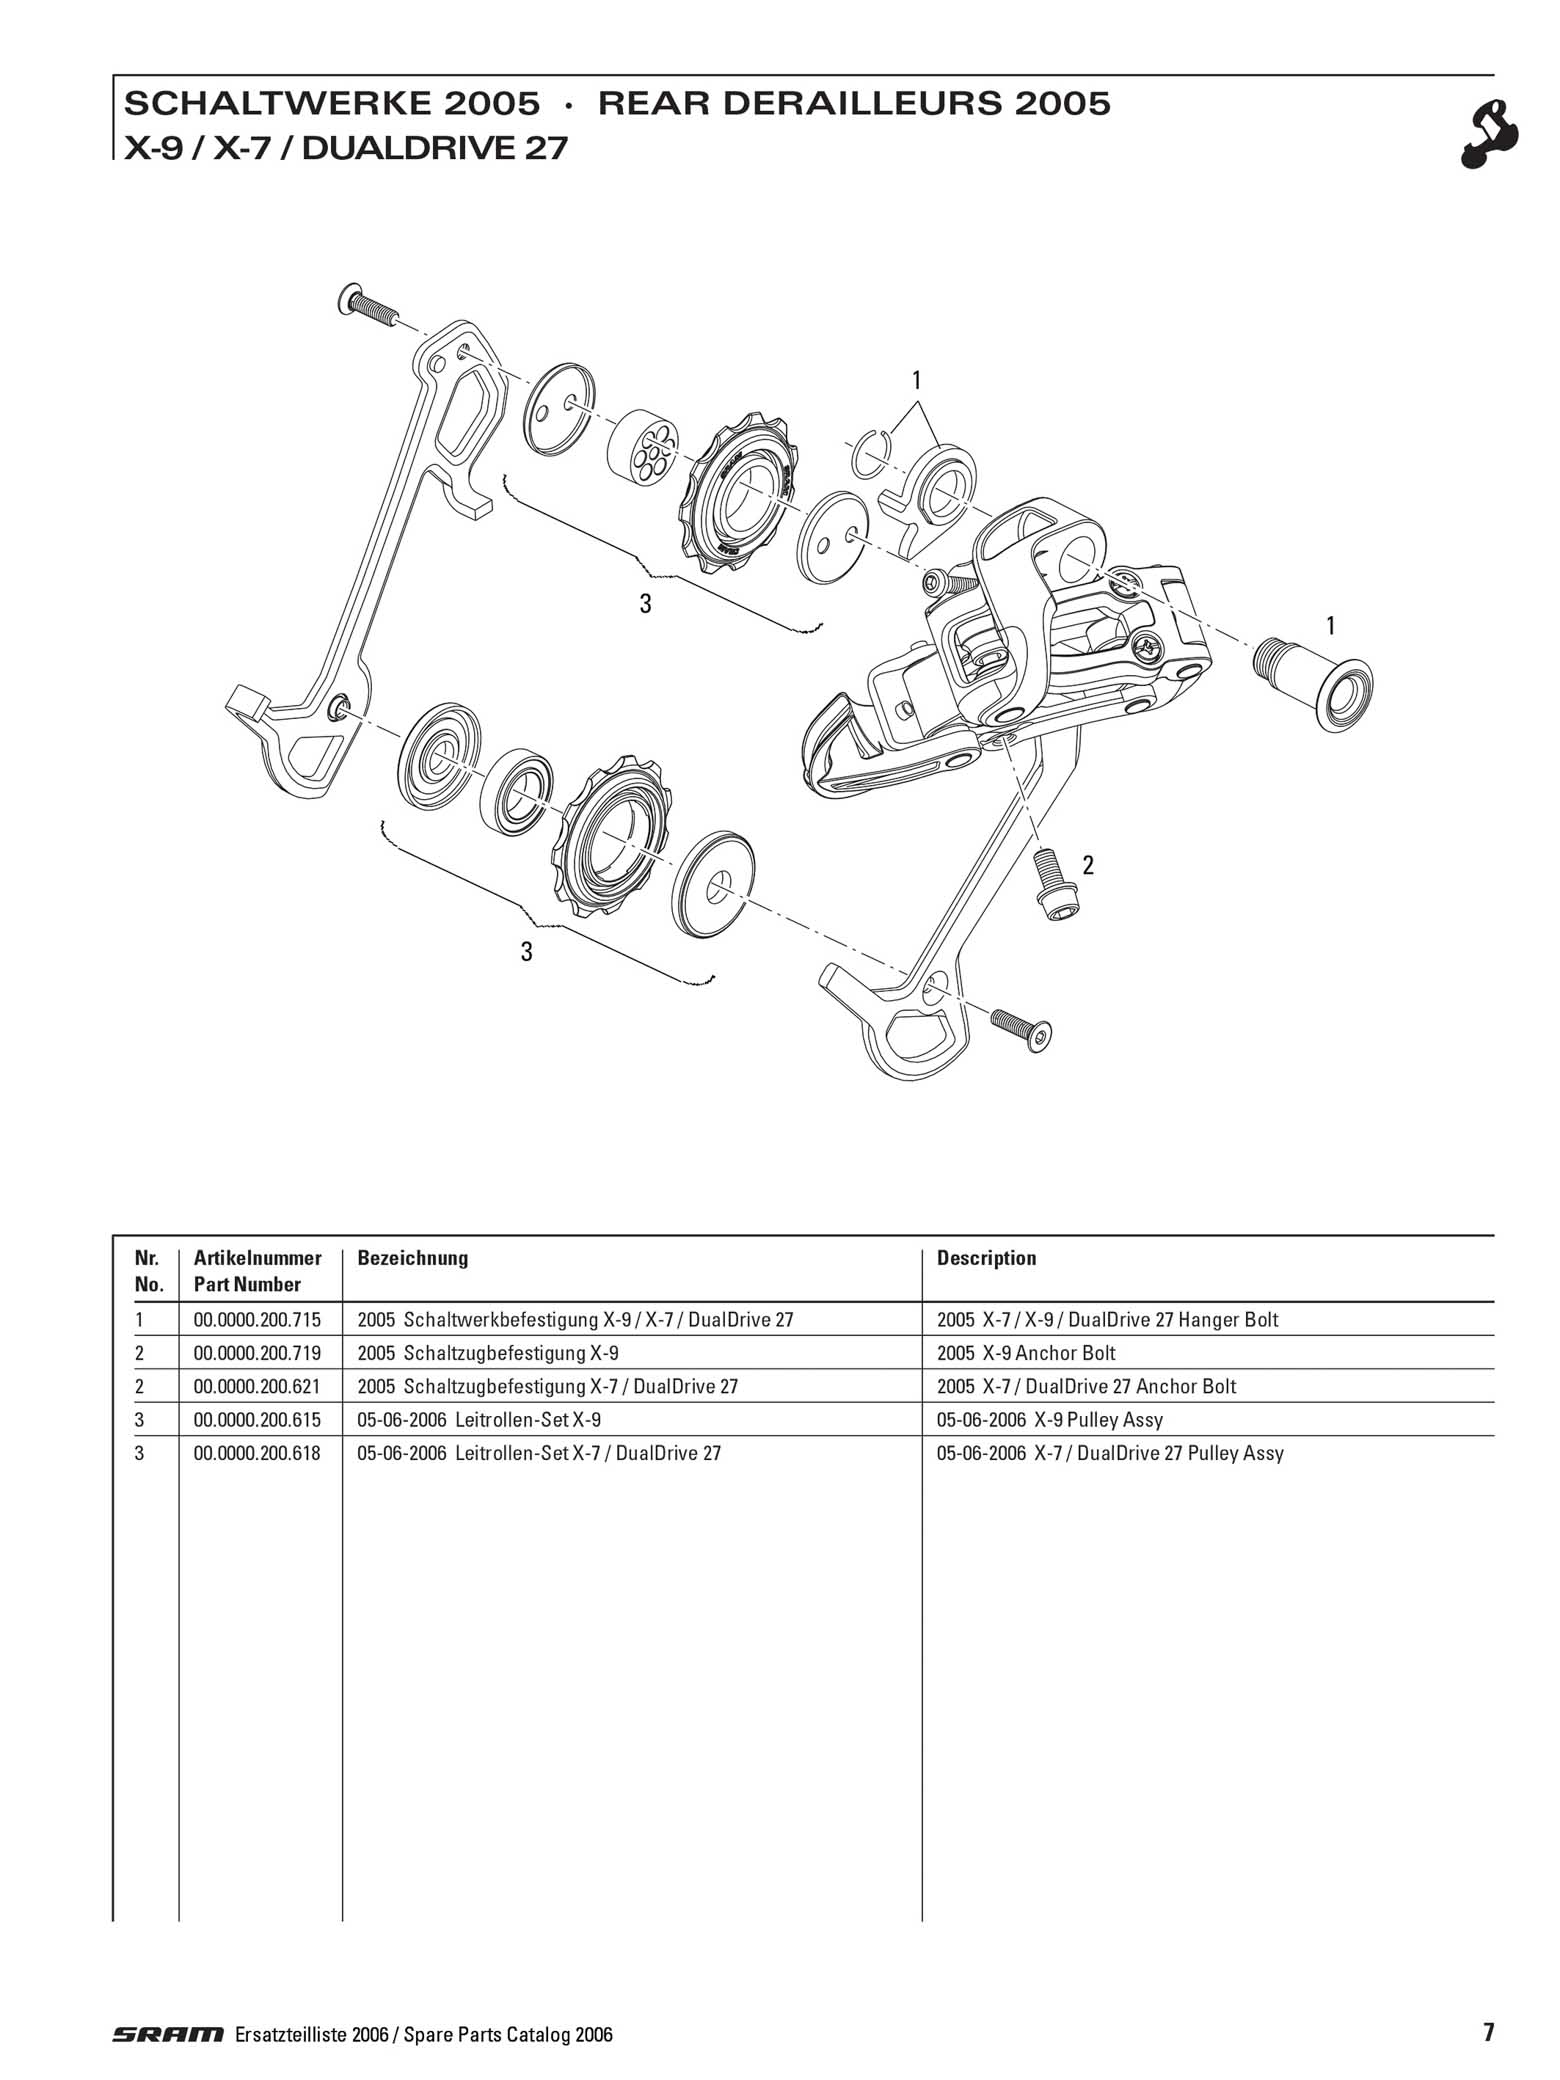 SRAM - Spare Parts Catalog 2006 page 007 main image